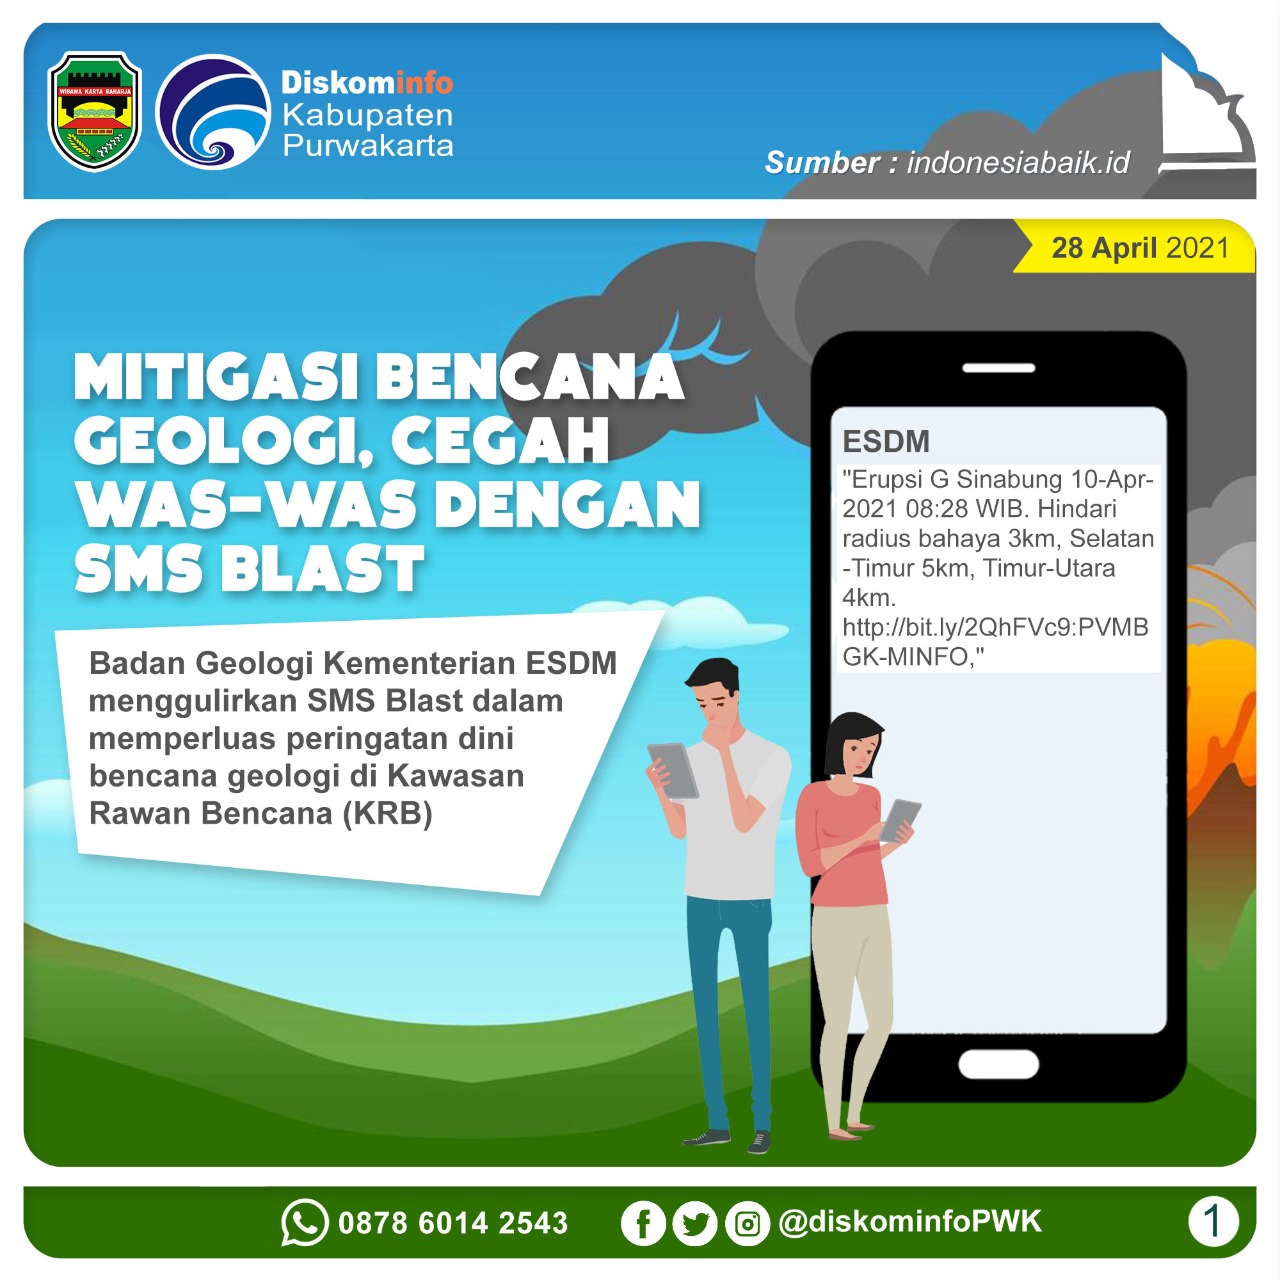 Mitigasi Bencana Geologi, Cegah Was-was dengan SMS Blast